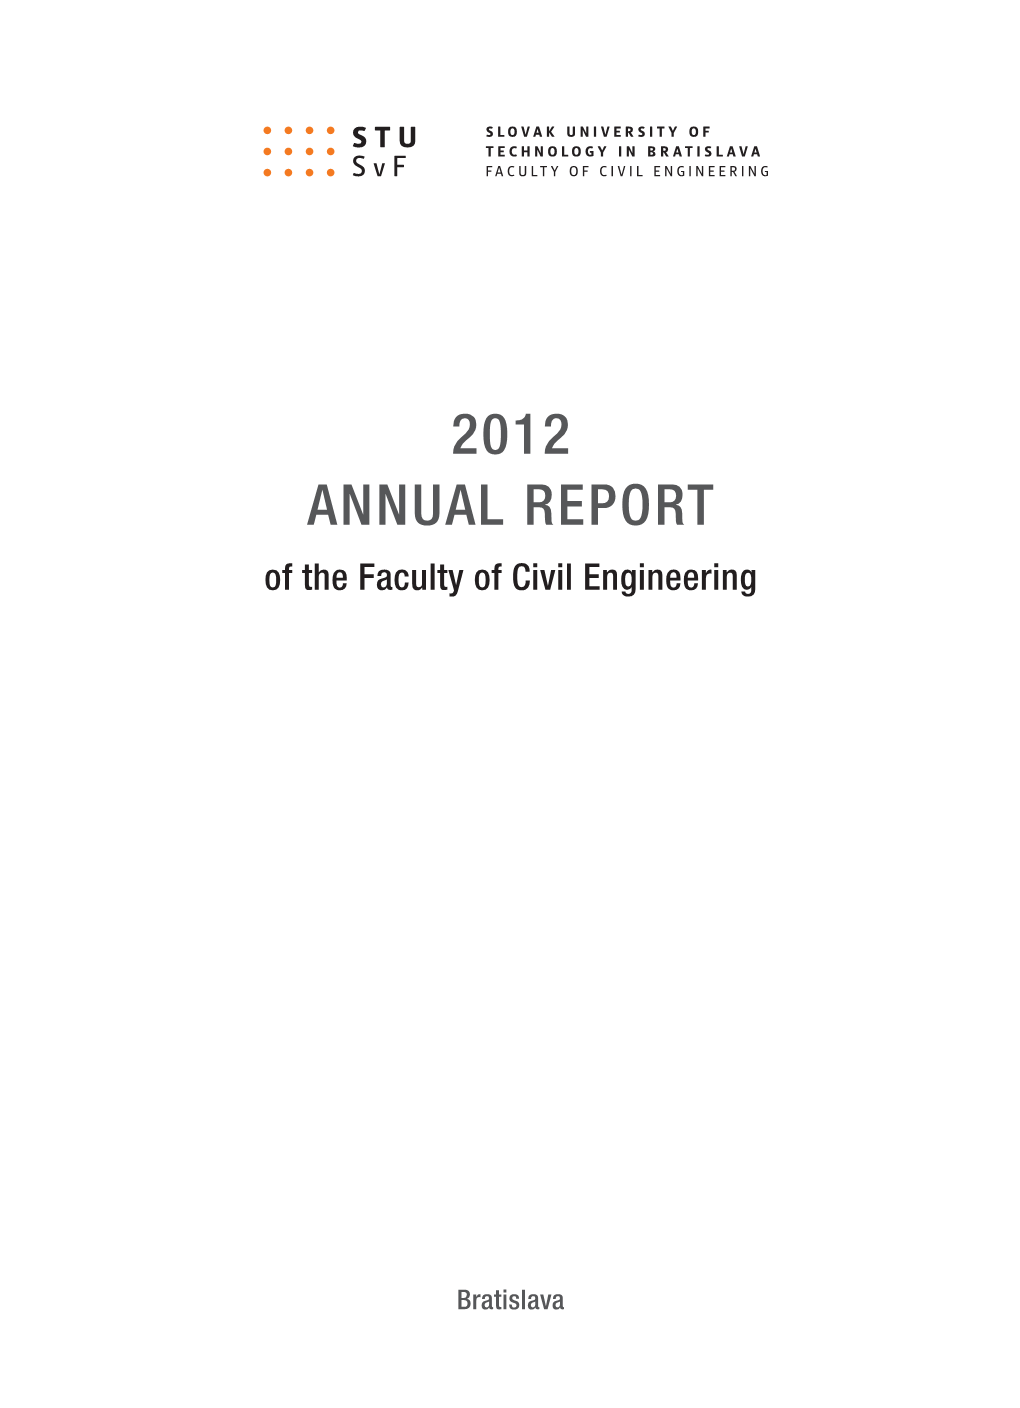 Annual Report 2012 Vnutro.Indd